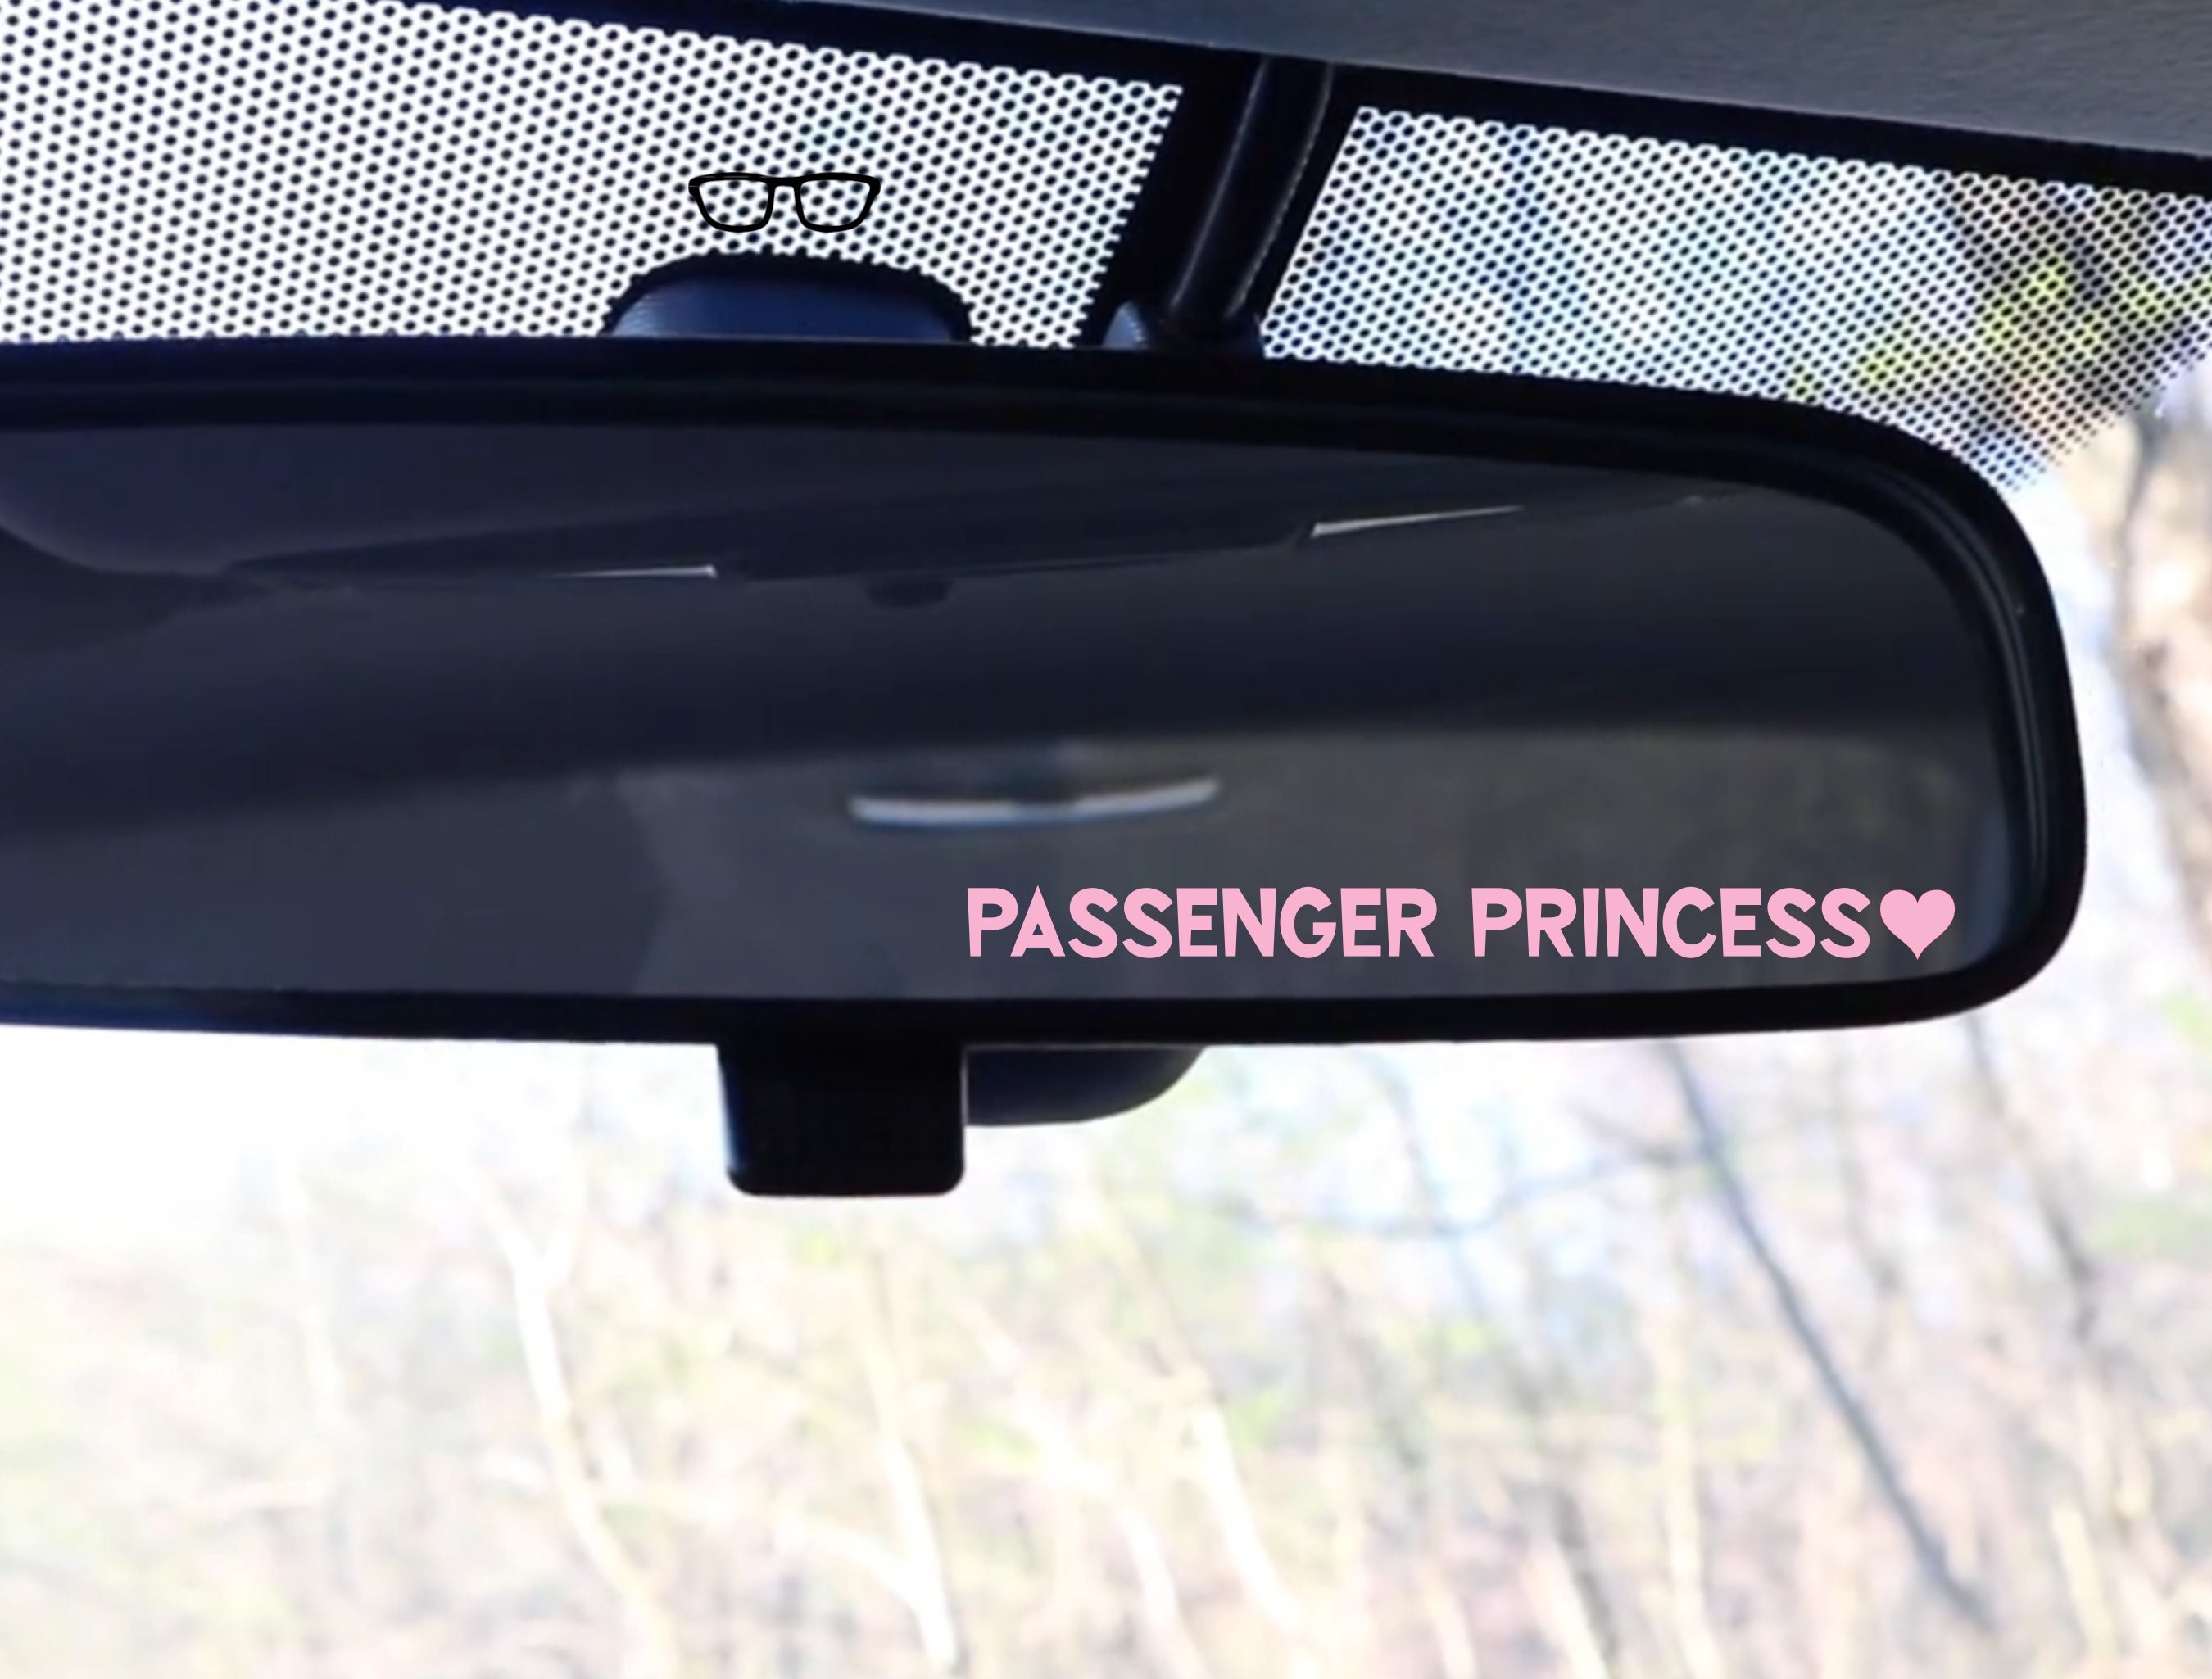 Passenger Princess, Car Mirror Decal, Car Visor Sticker, Affirmation Decal,  Positivity Decal, Cute Sticker, Mirror Decal, Free Shipping -  Italia